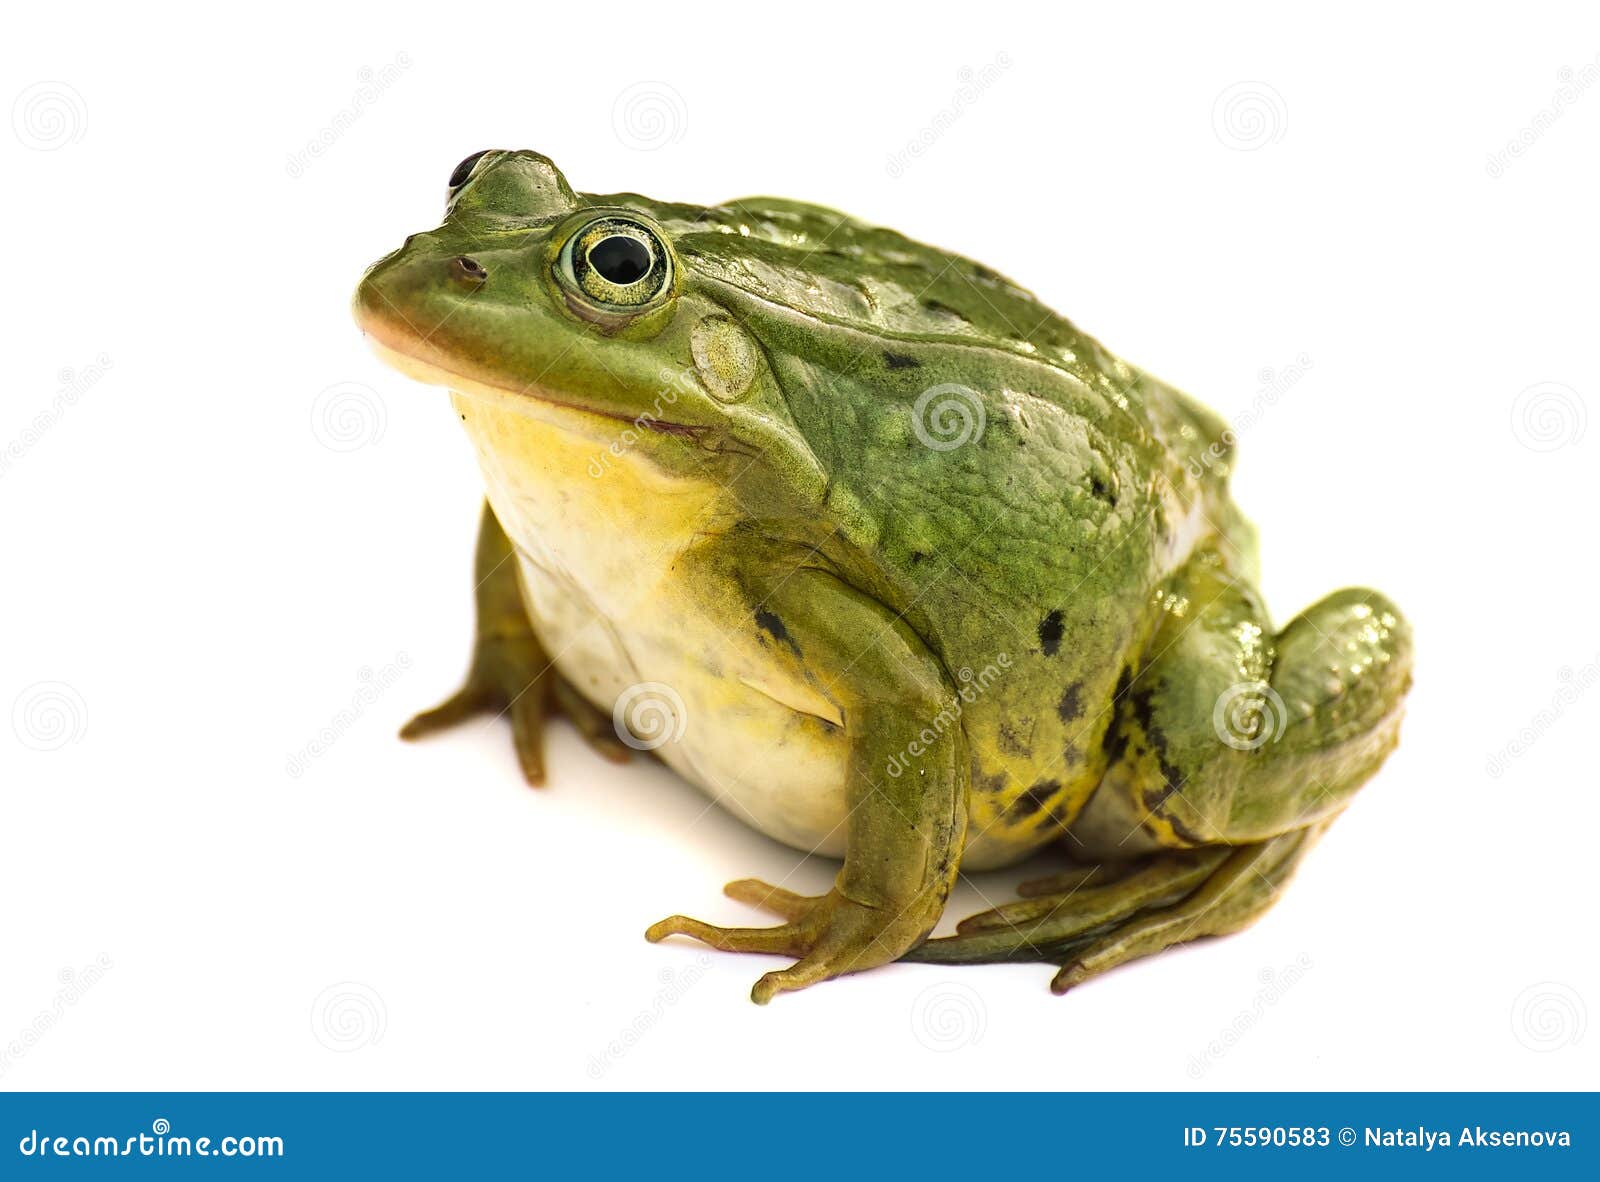 rana esculenta. green ,european or water, frog on white background.